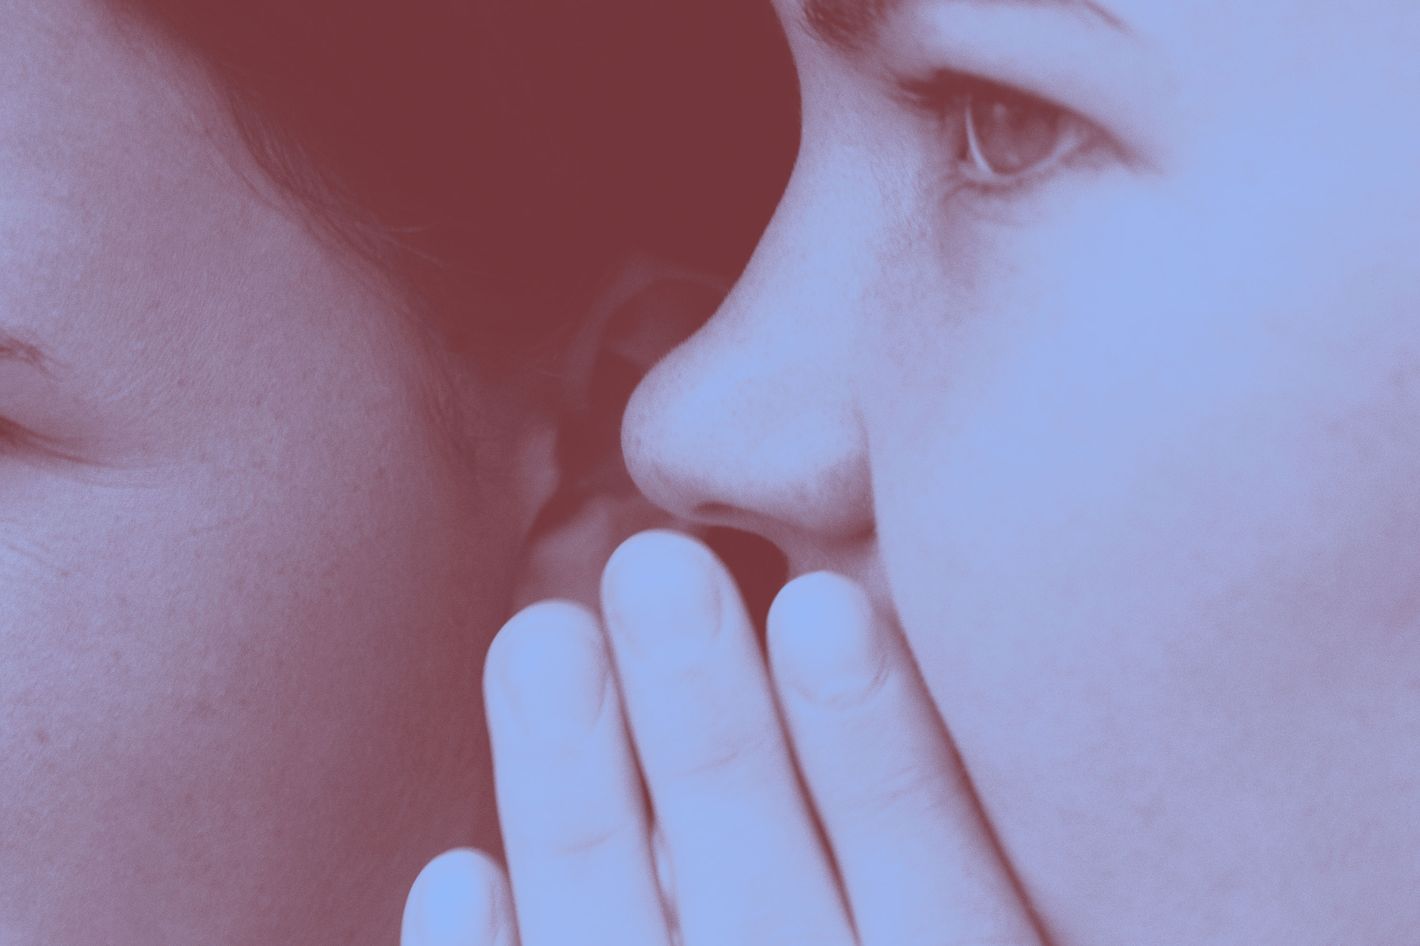 2x Sex Video - Science Finally Starts to Explain 'Whisper Porn'